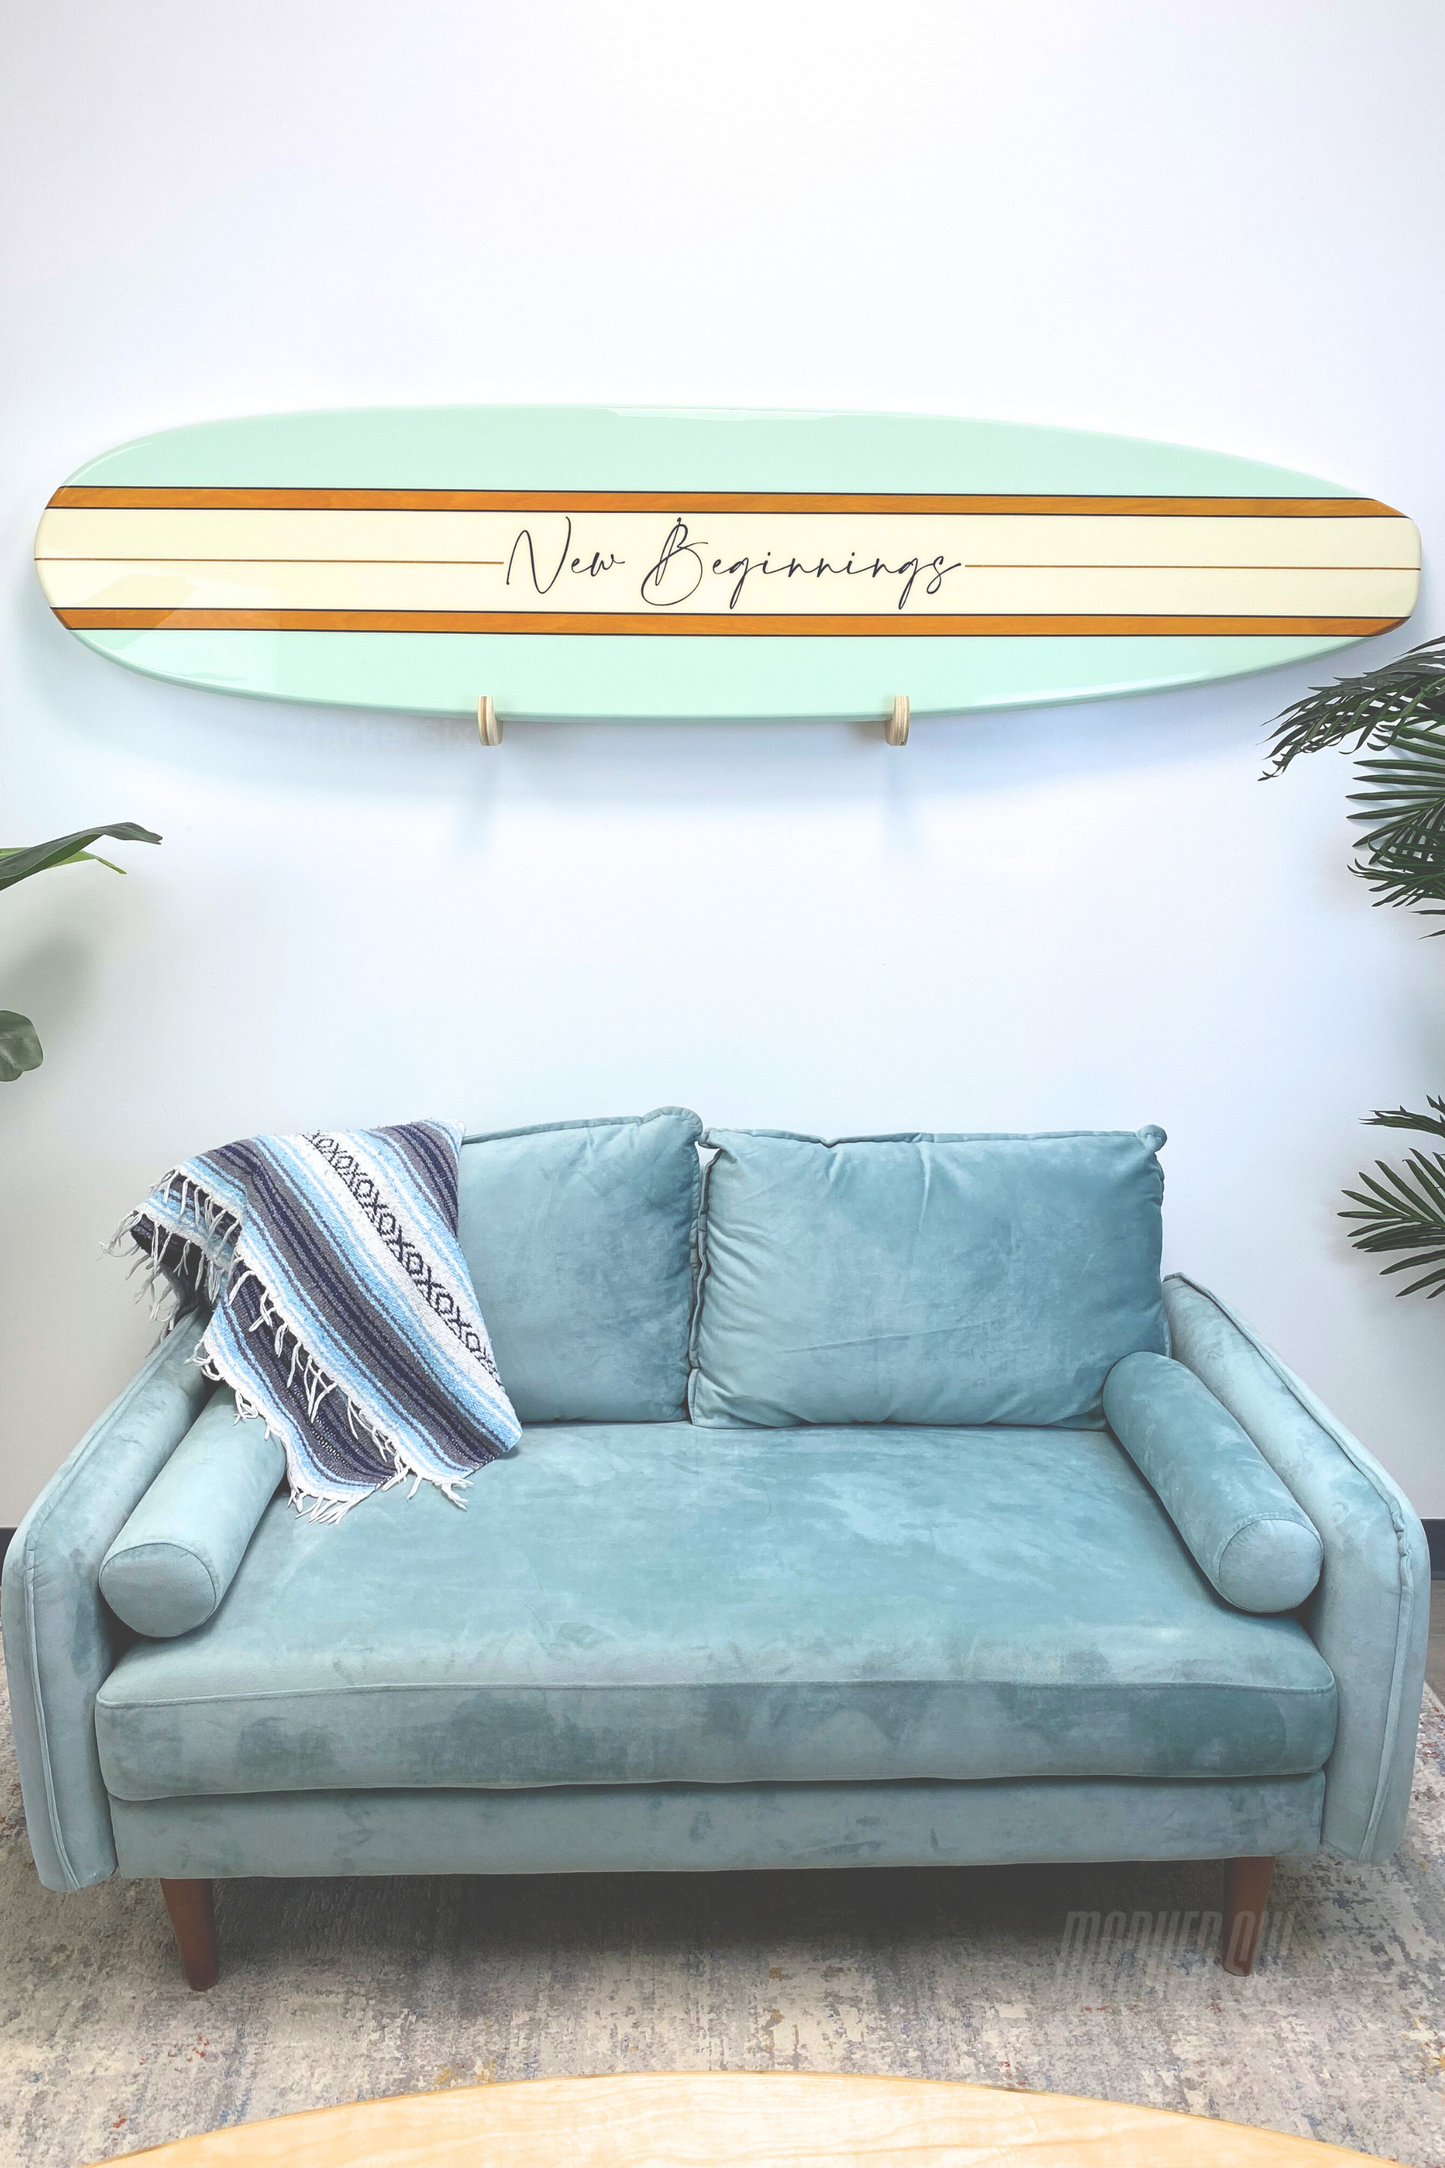 The Classic Surfboard Wall Art